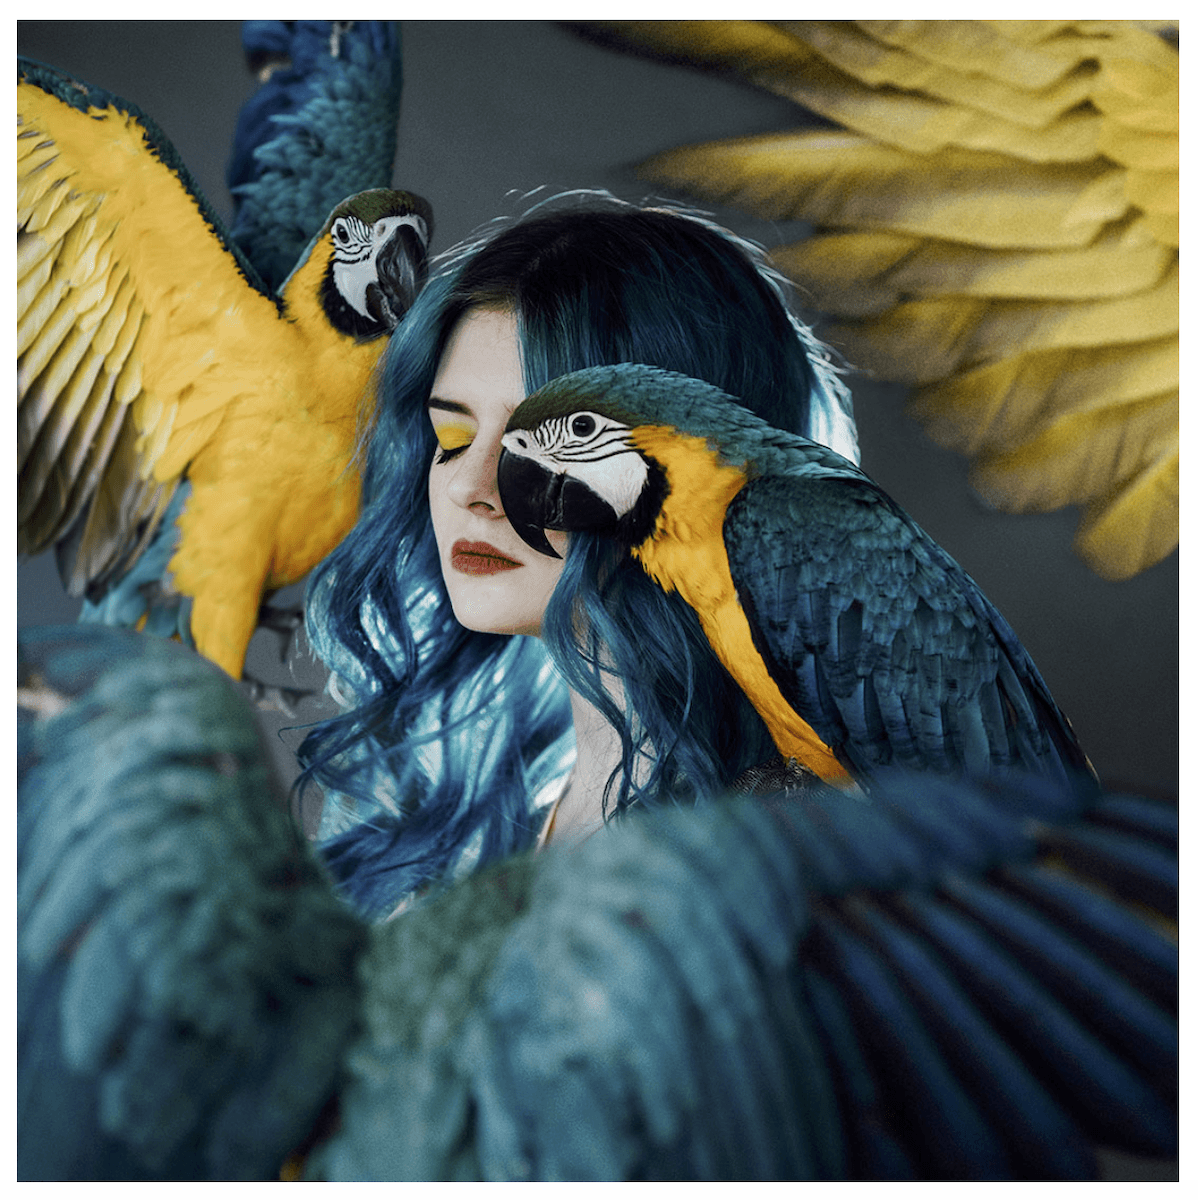 Colorful woman's portrait with a parrot